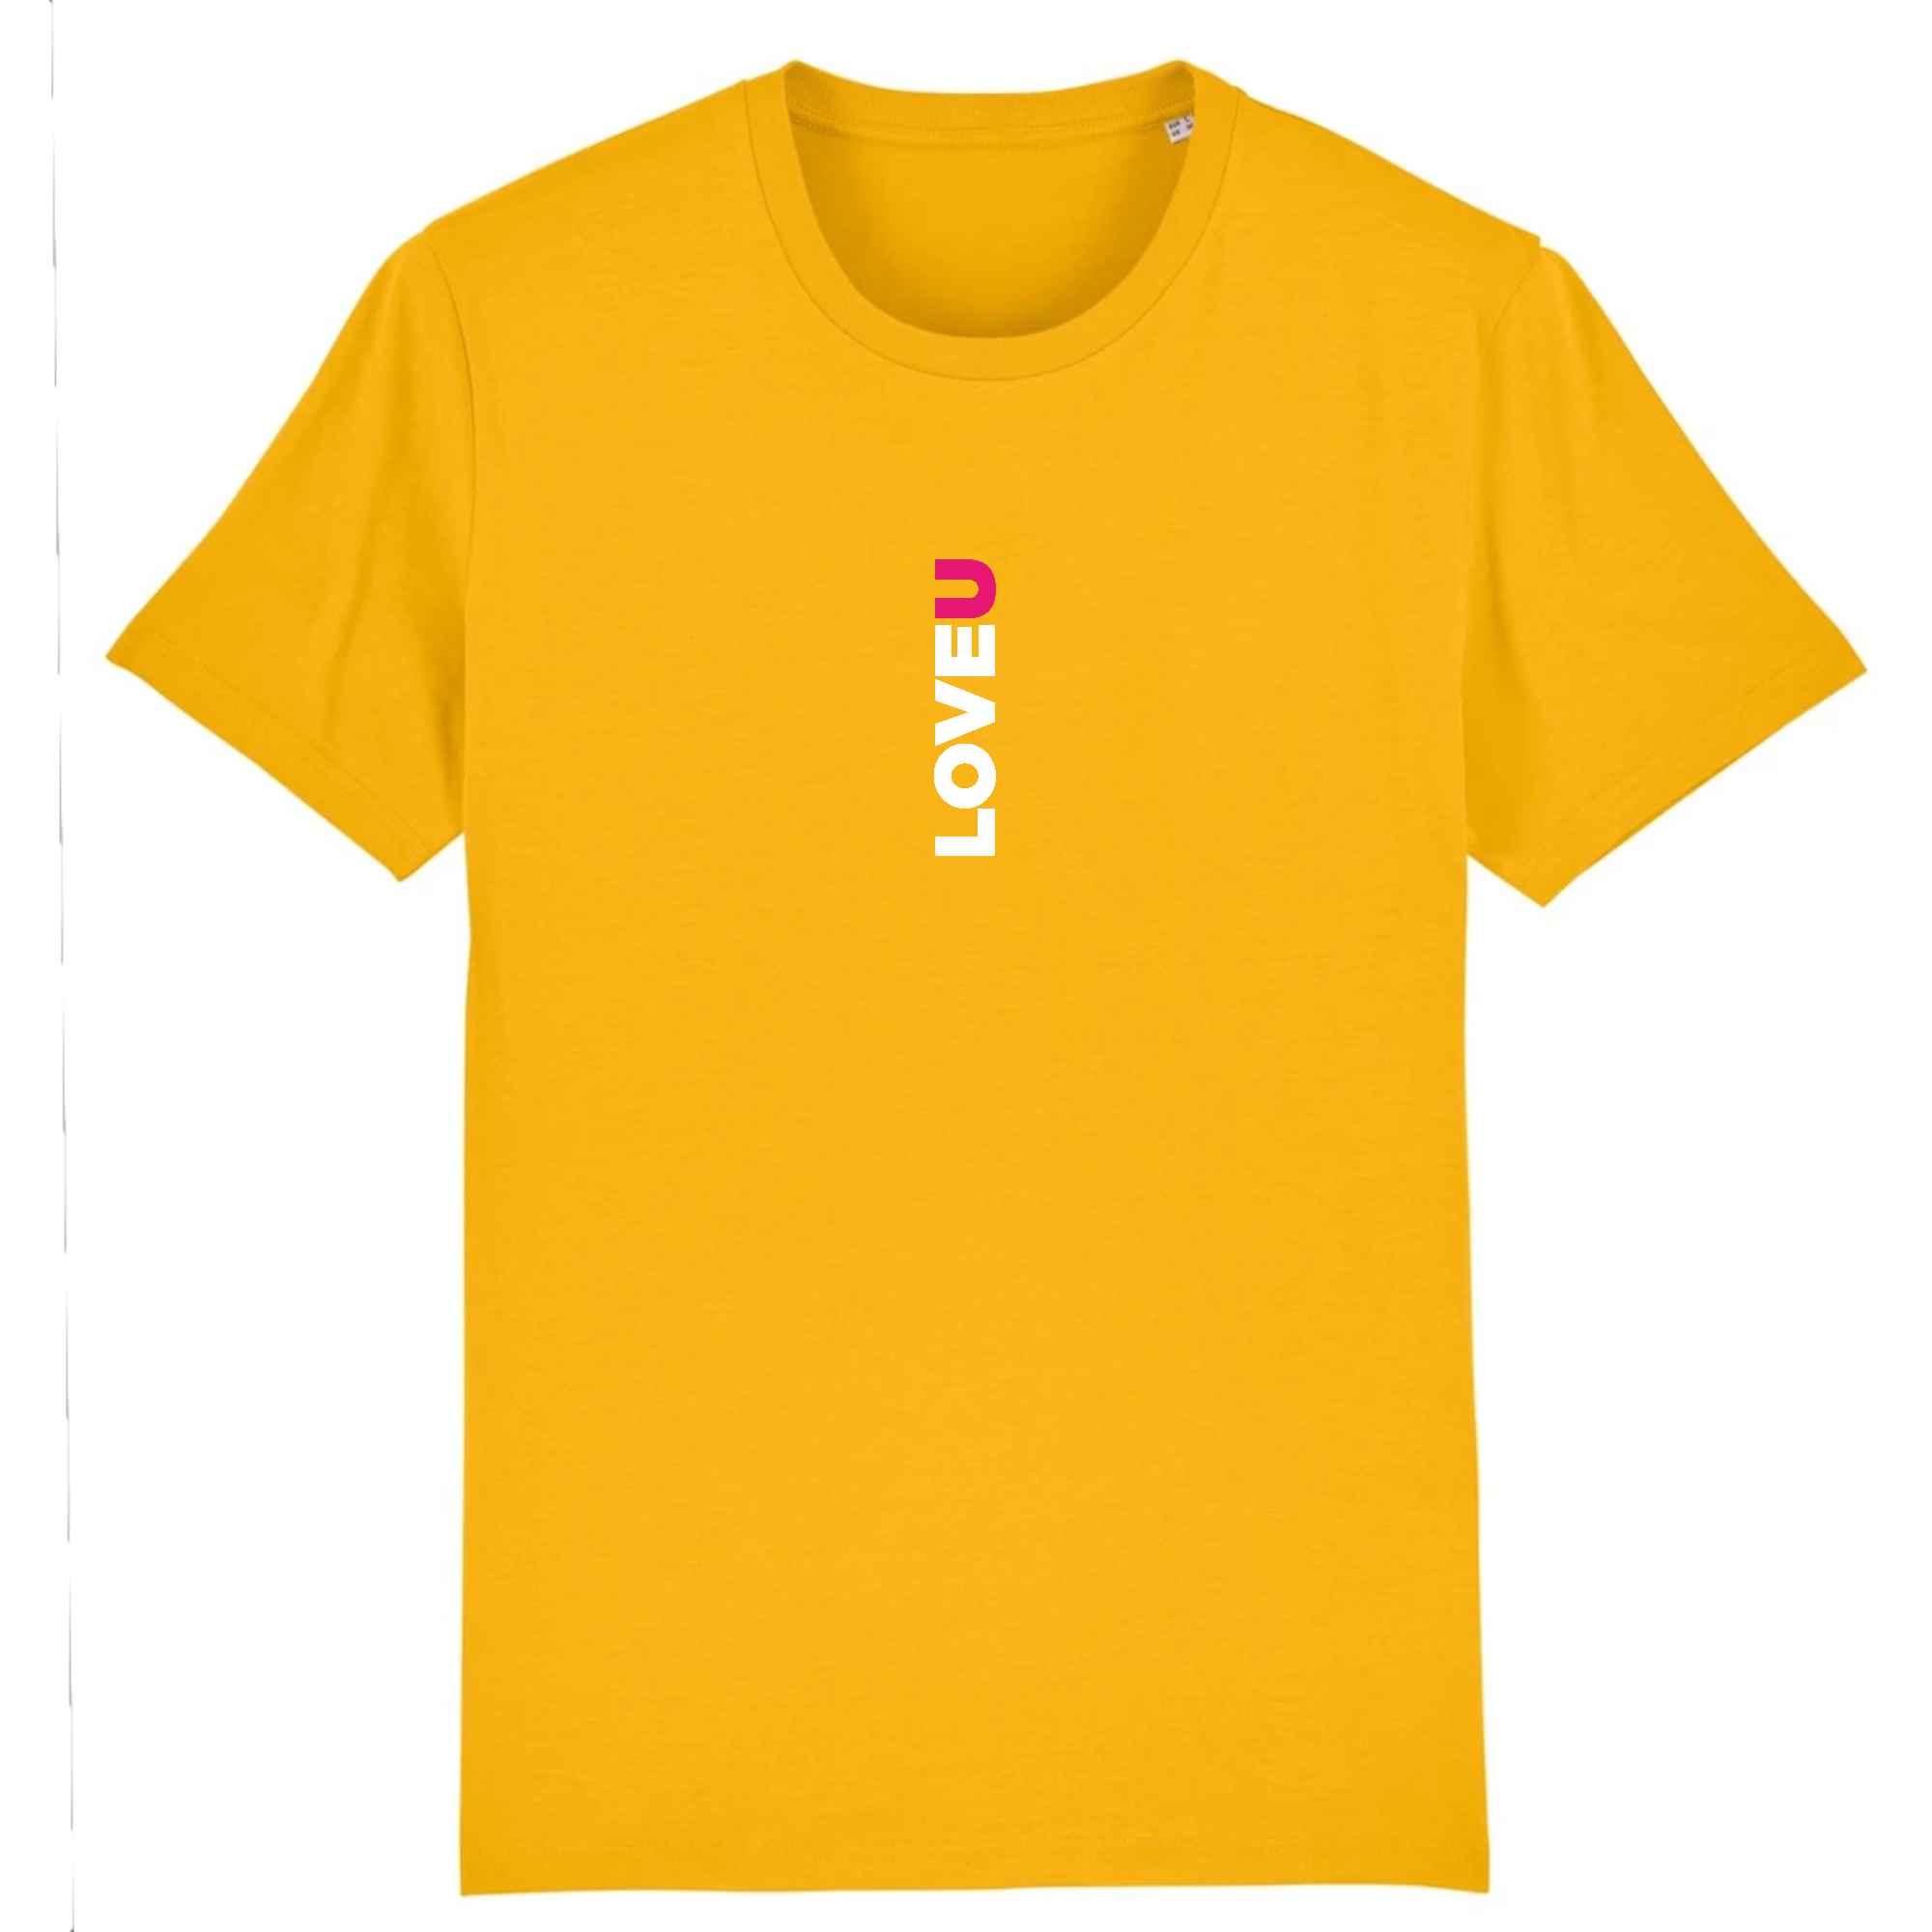 T-shirt unisexe jaune LOVE YOU - Collection Saint-valentin